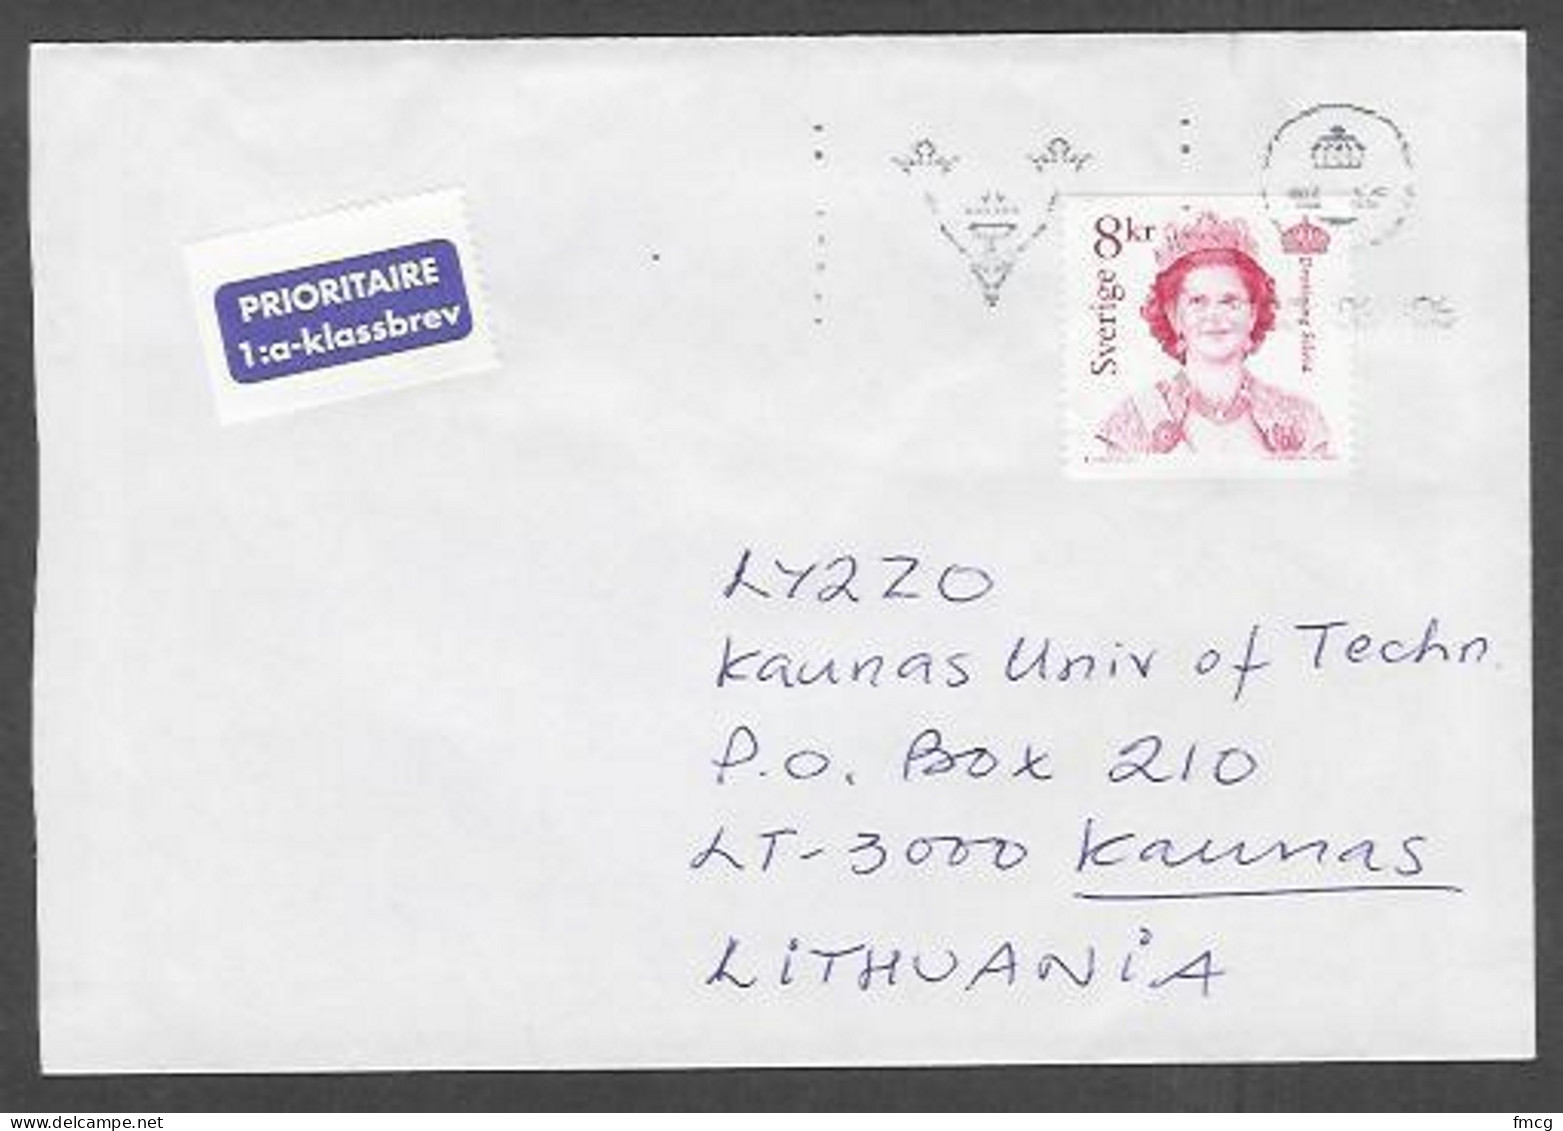 8 Kr Queen Sivia On Cover To Kaunas Lithuania - Storia Postale